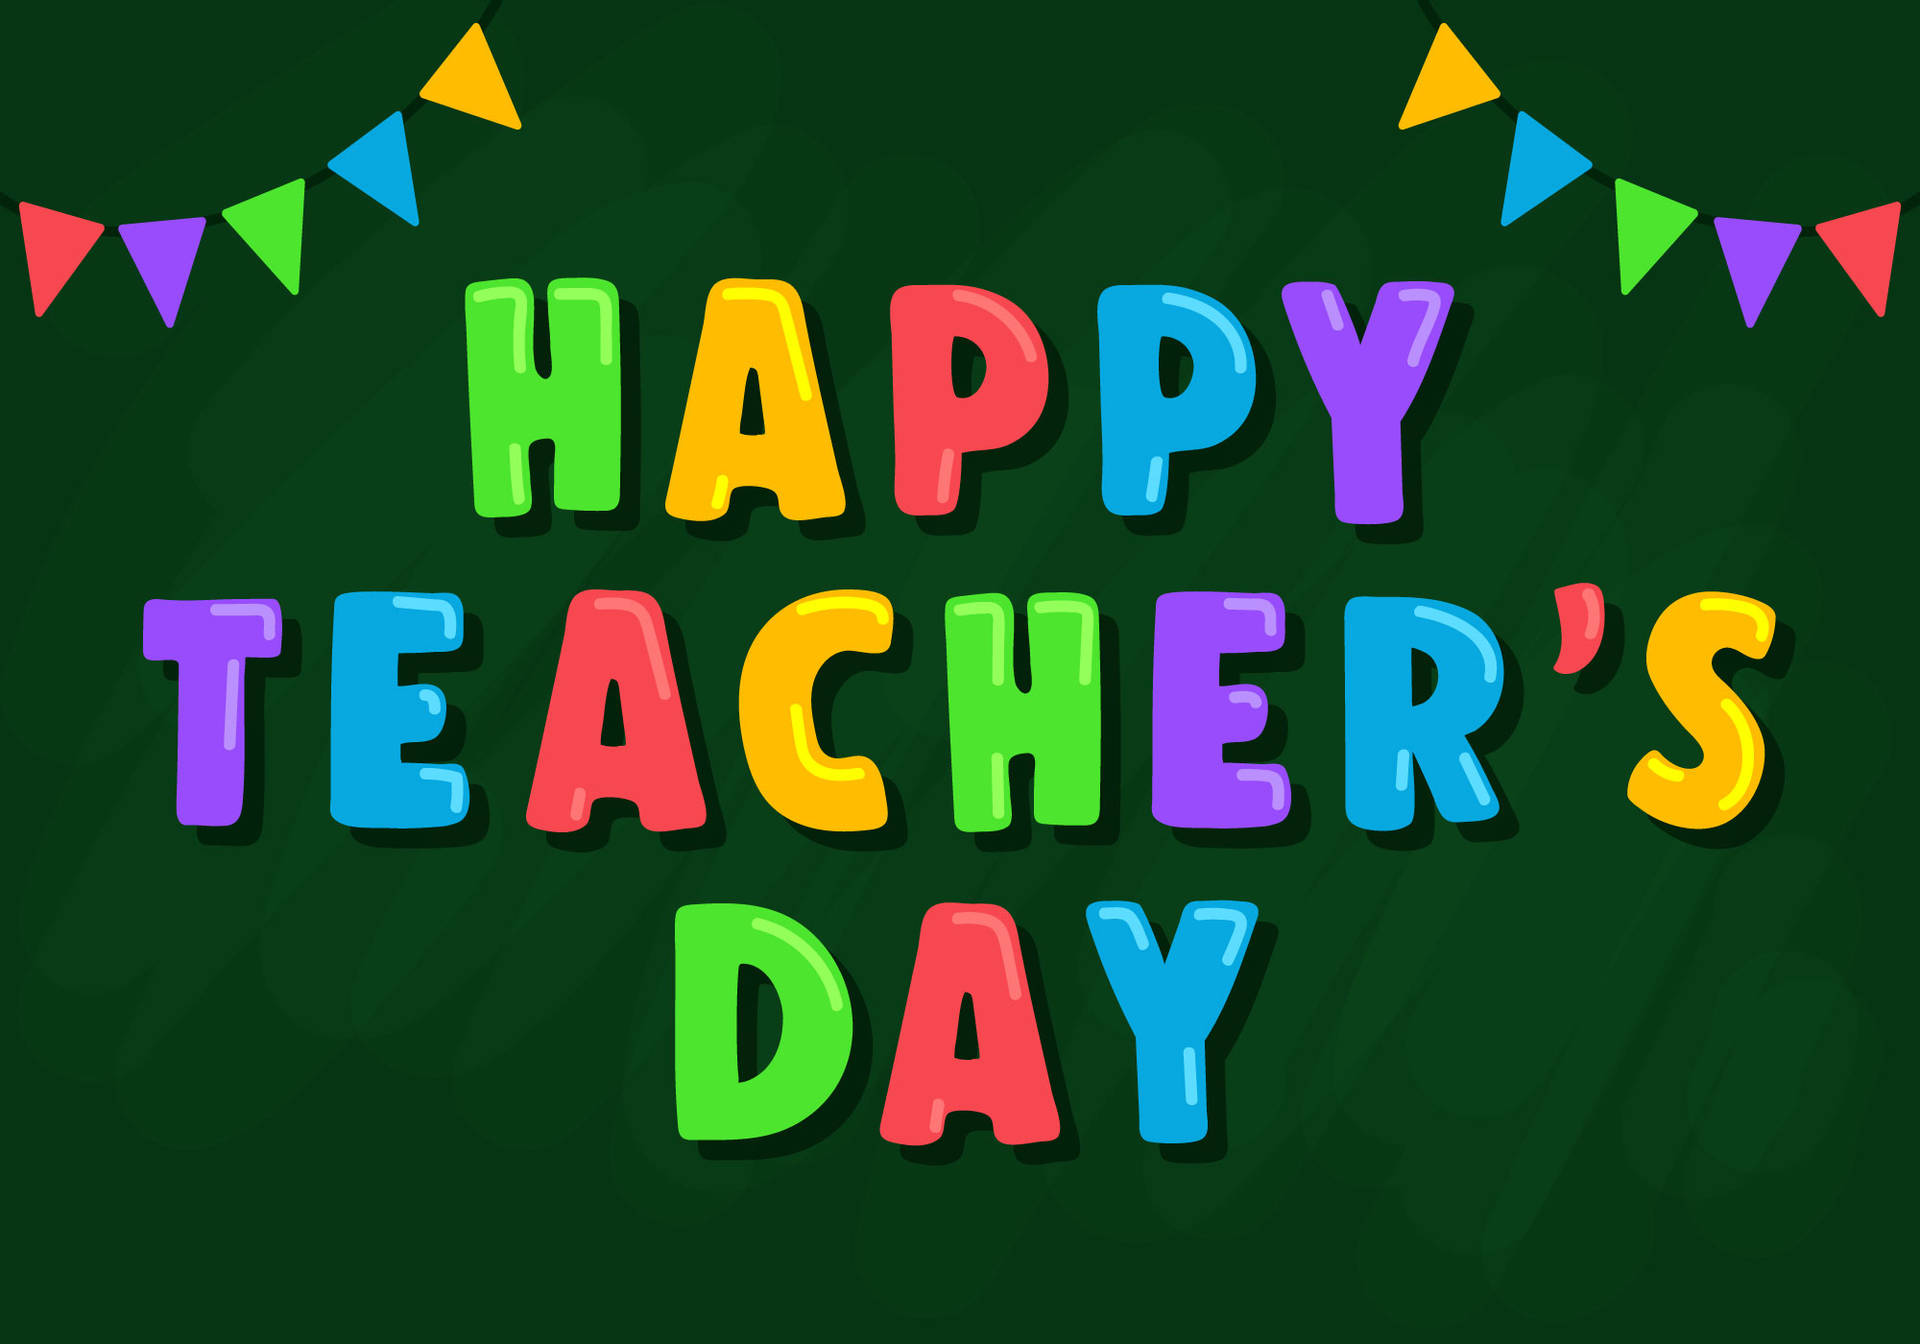 Happy Teachers' Day Festival